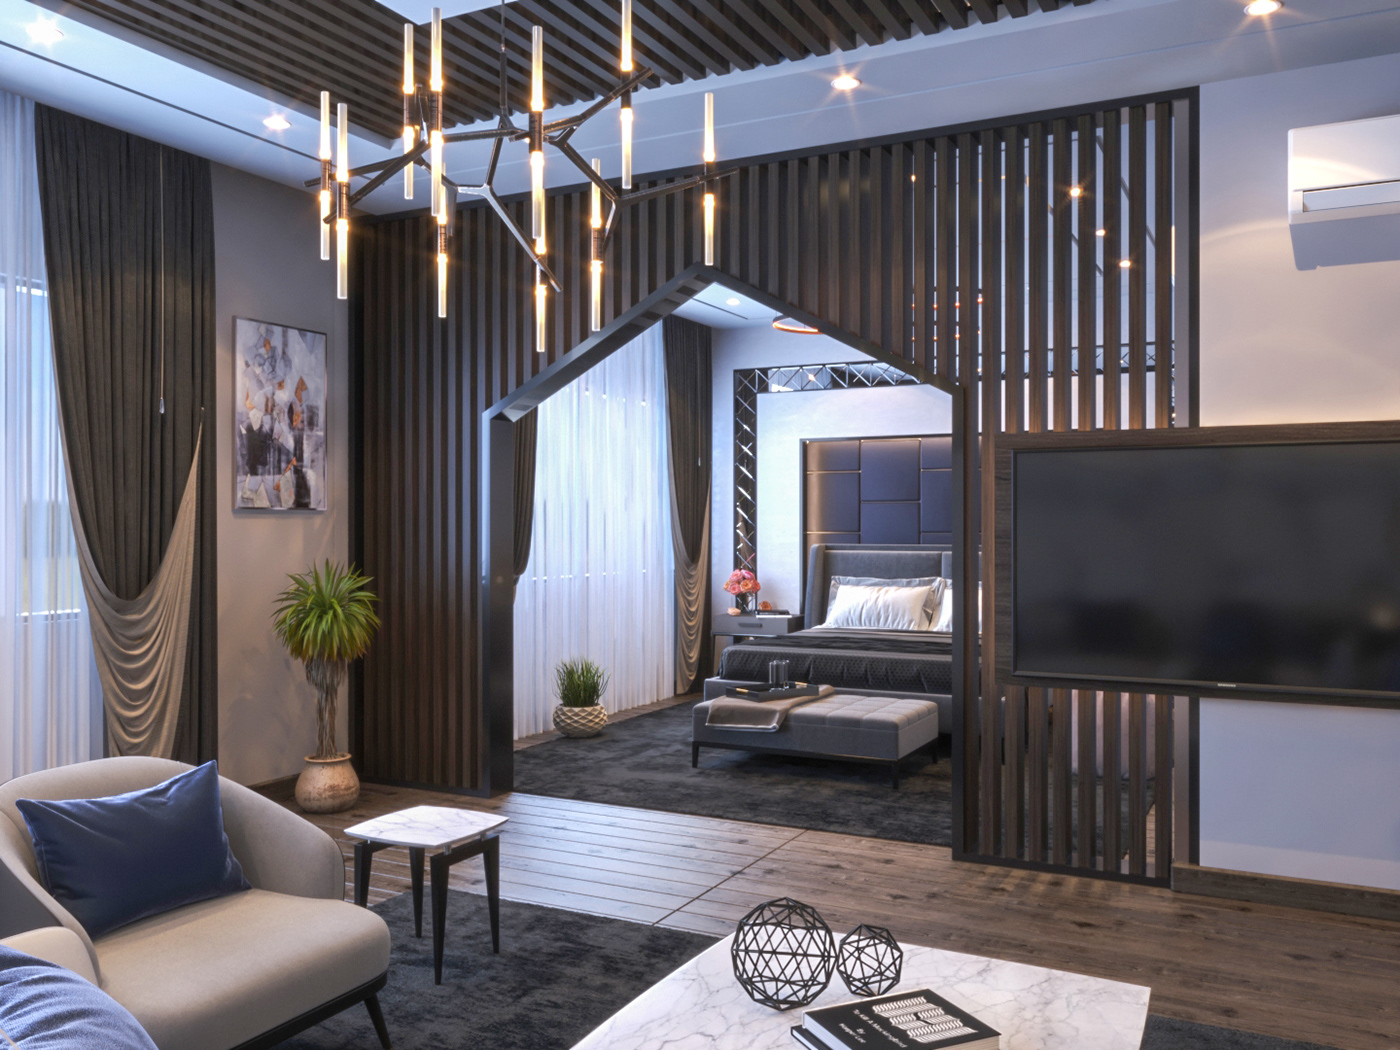 Interior design decor home Villa bedroom moder Render realistic free